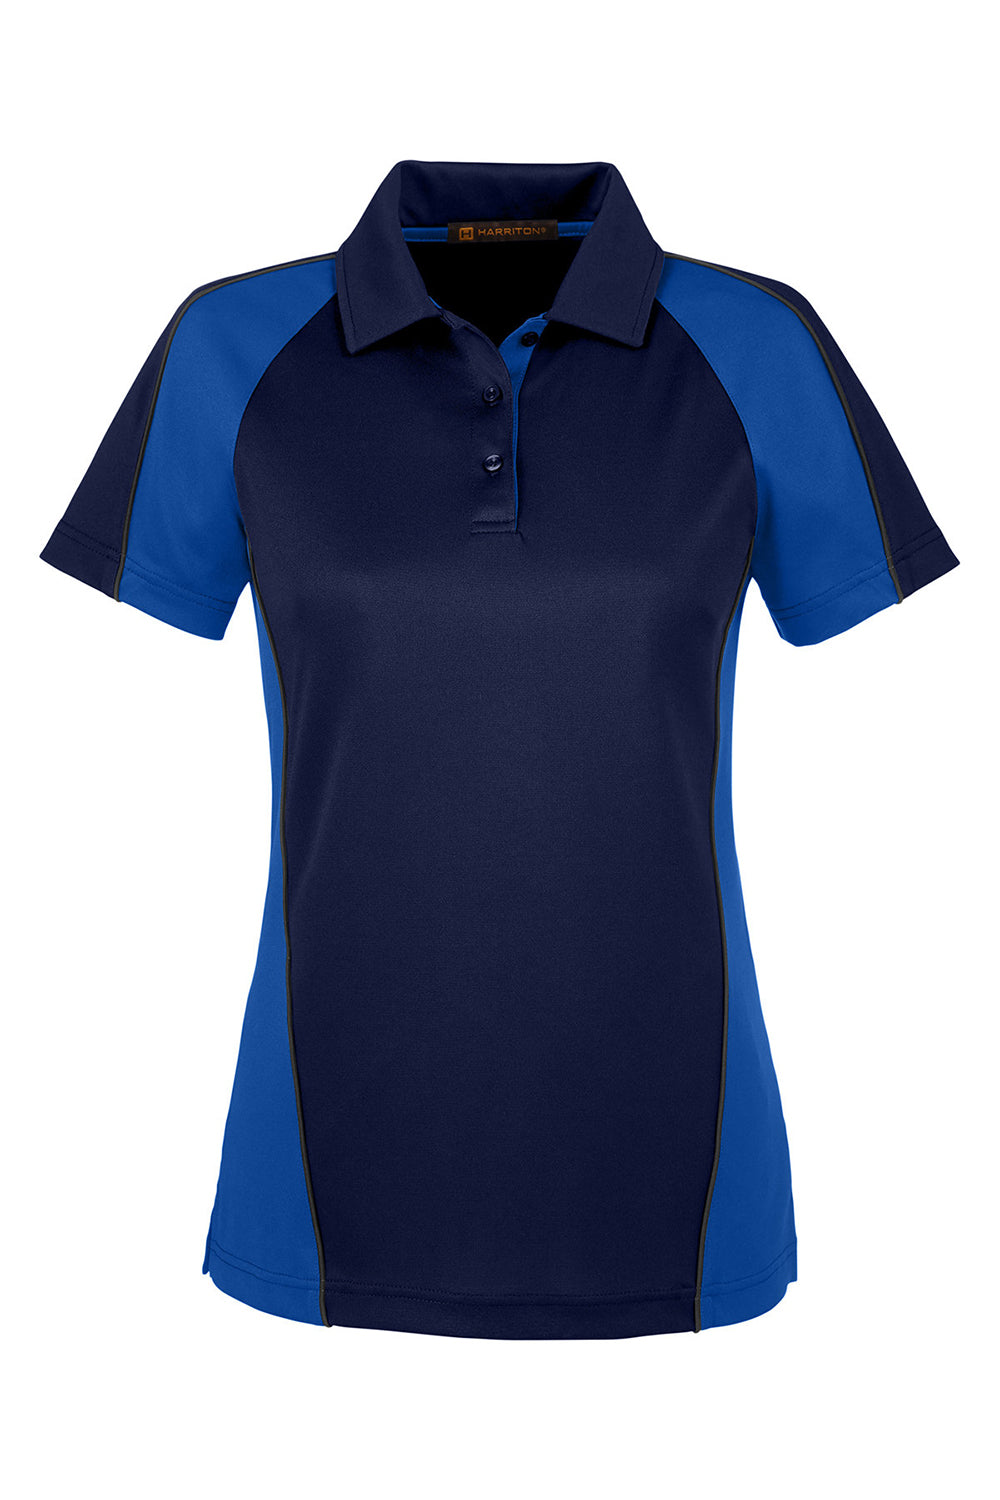 Harriton M385W Womens Advantage Performance Moisture Wicking Colorblock Short Sleeve Polo Shirt Dark Navy Blue/Royal Blue Flat Front